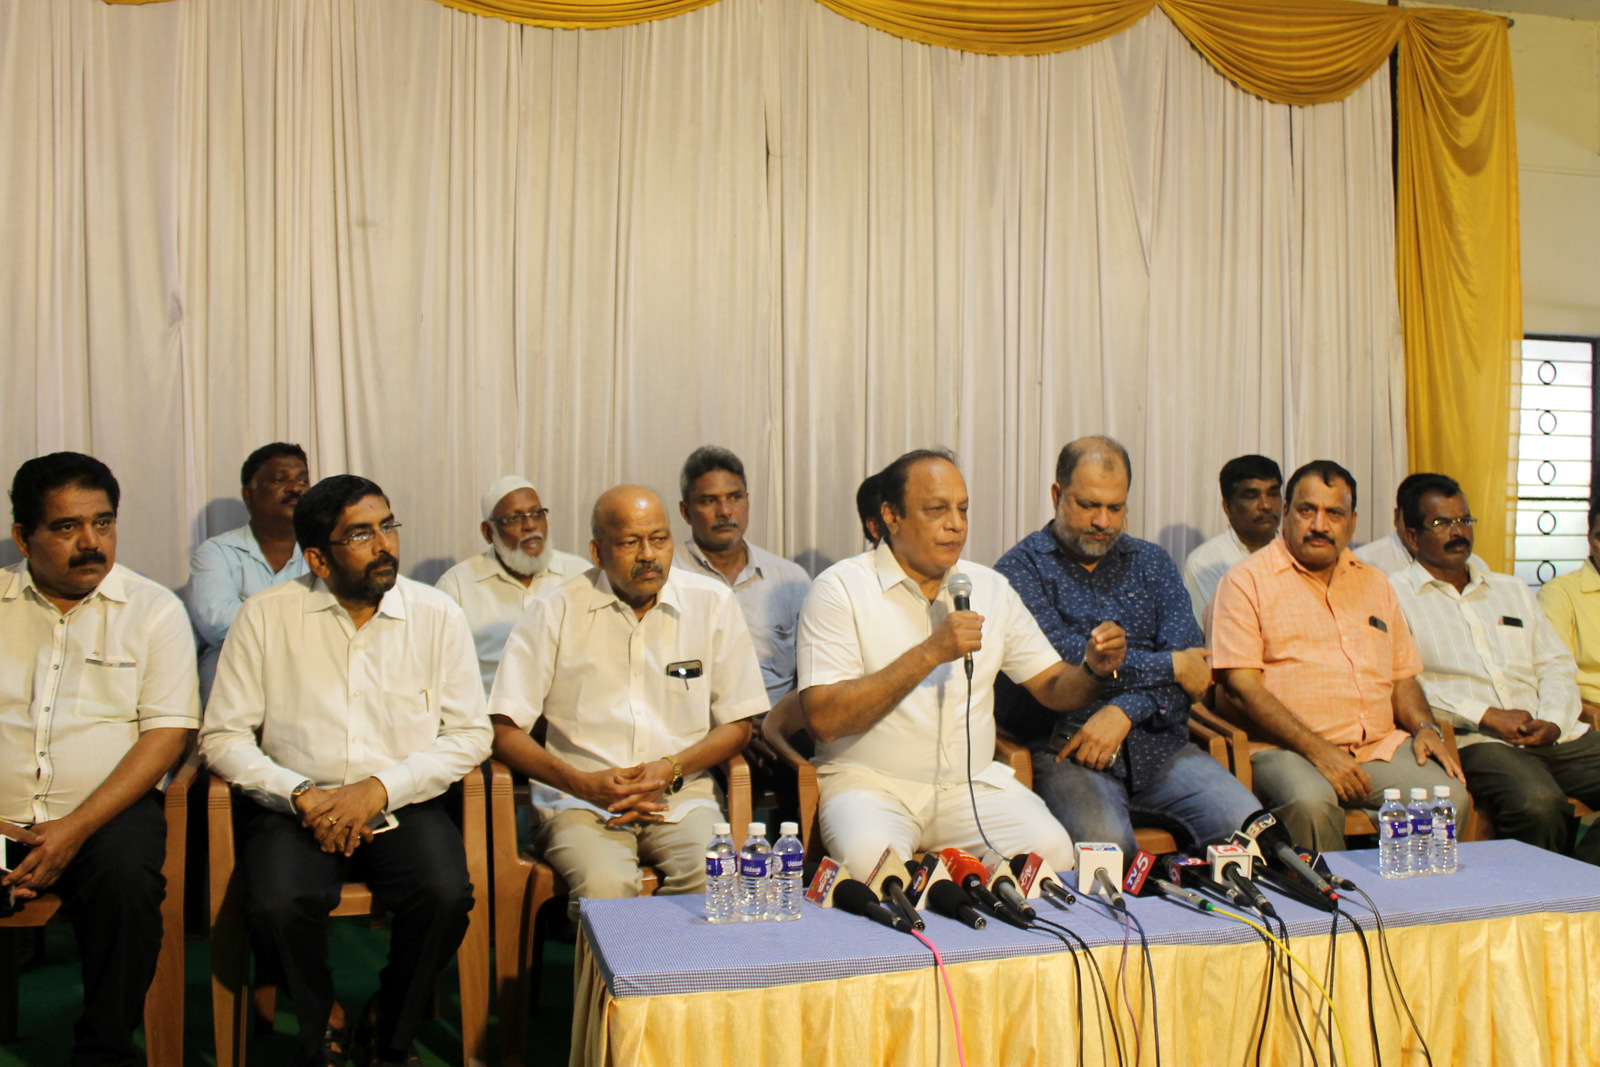 Billava - Muslim friendly get-together postponed amid controversies - Vinay Kumar Sorake